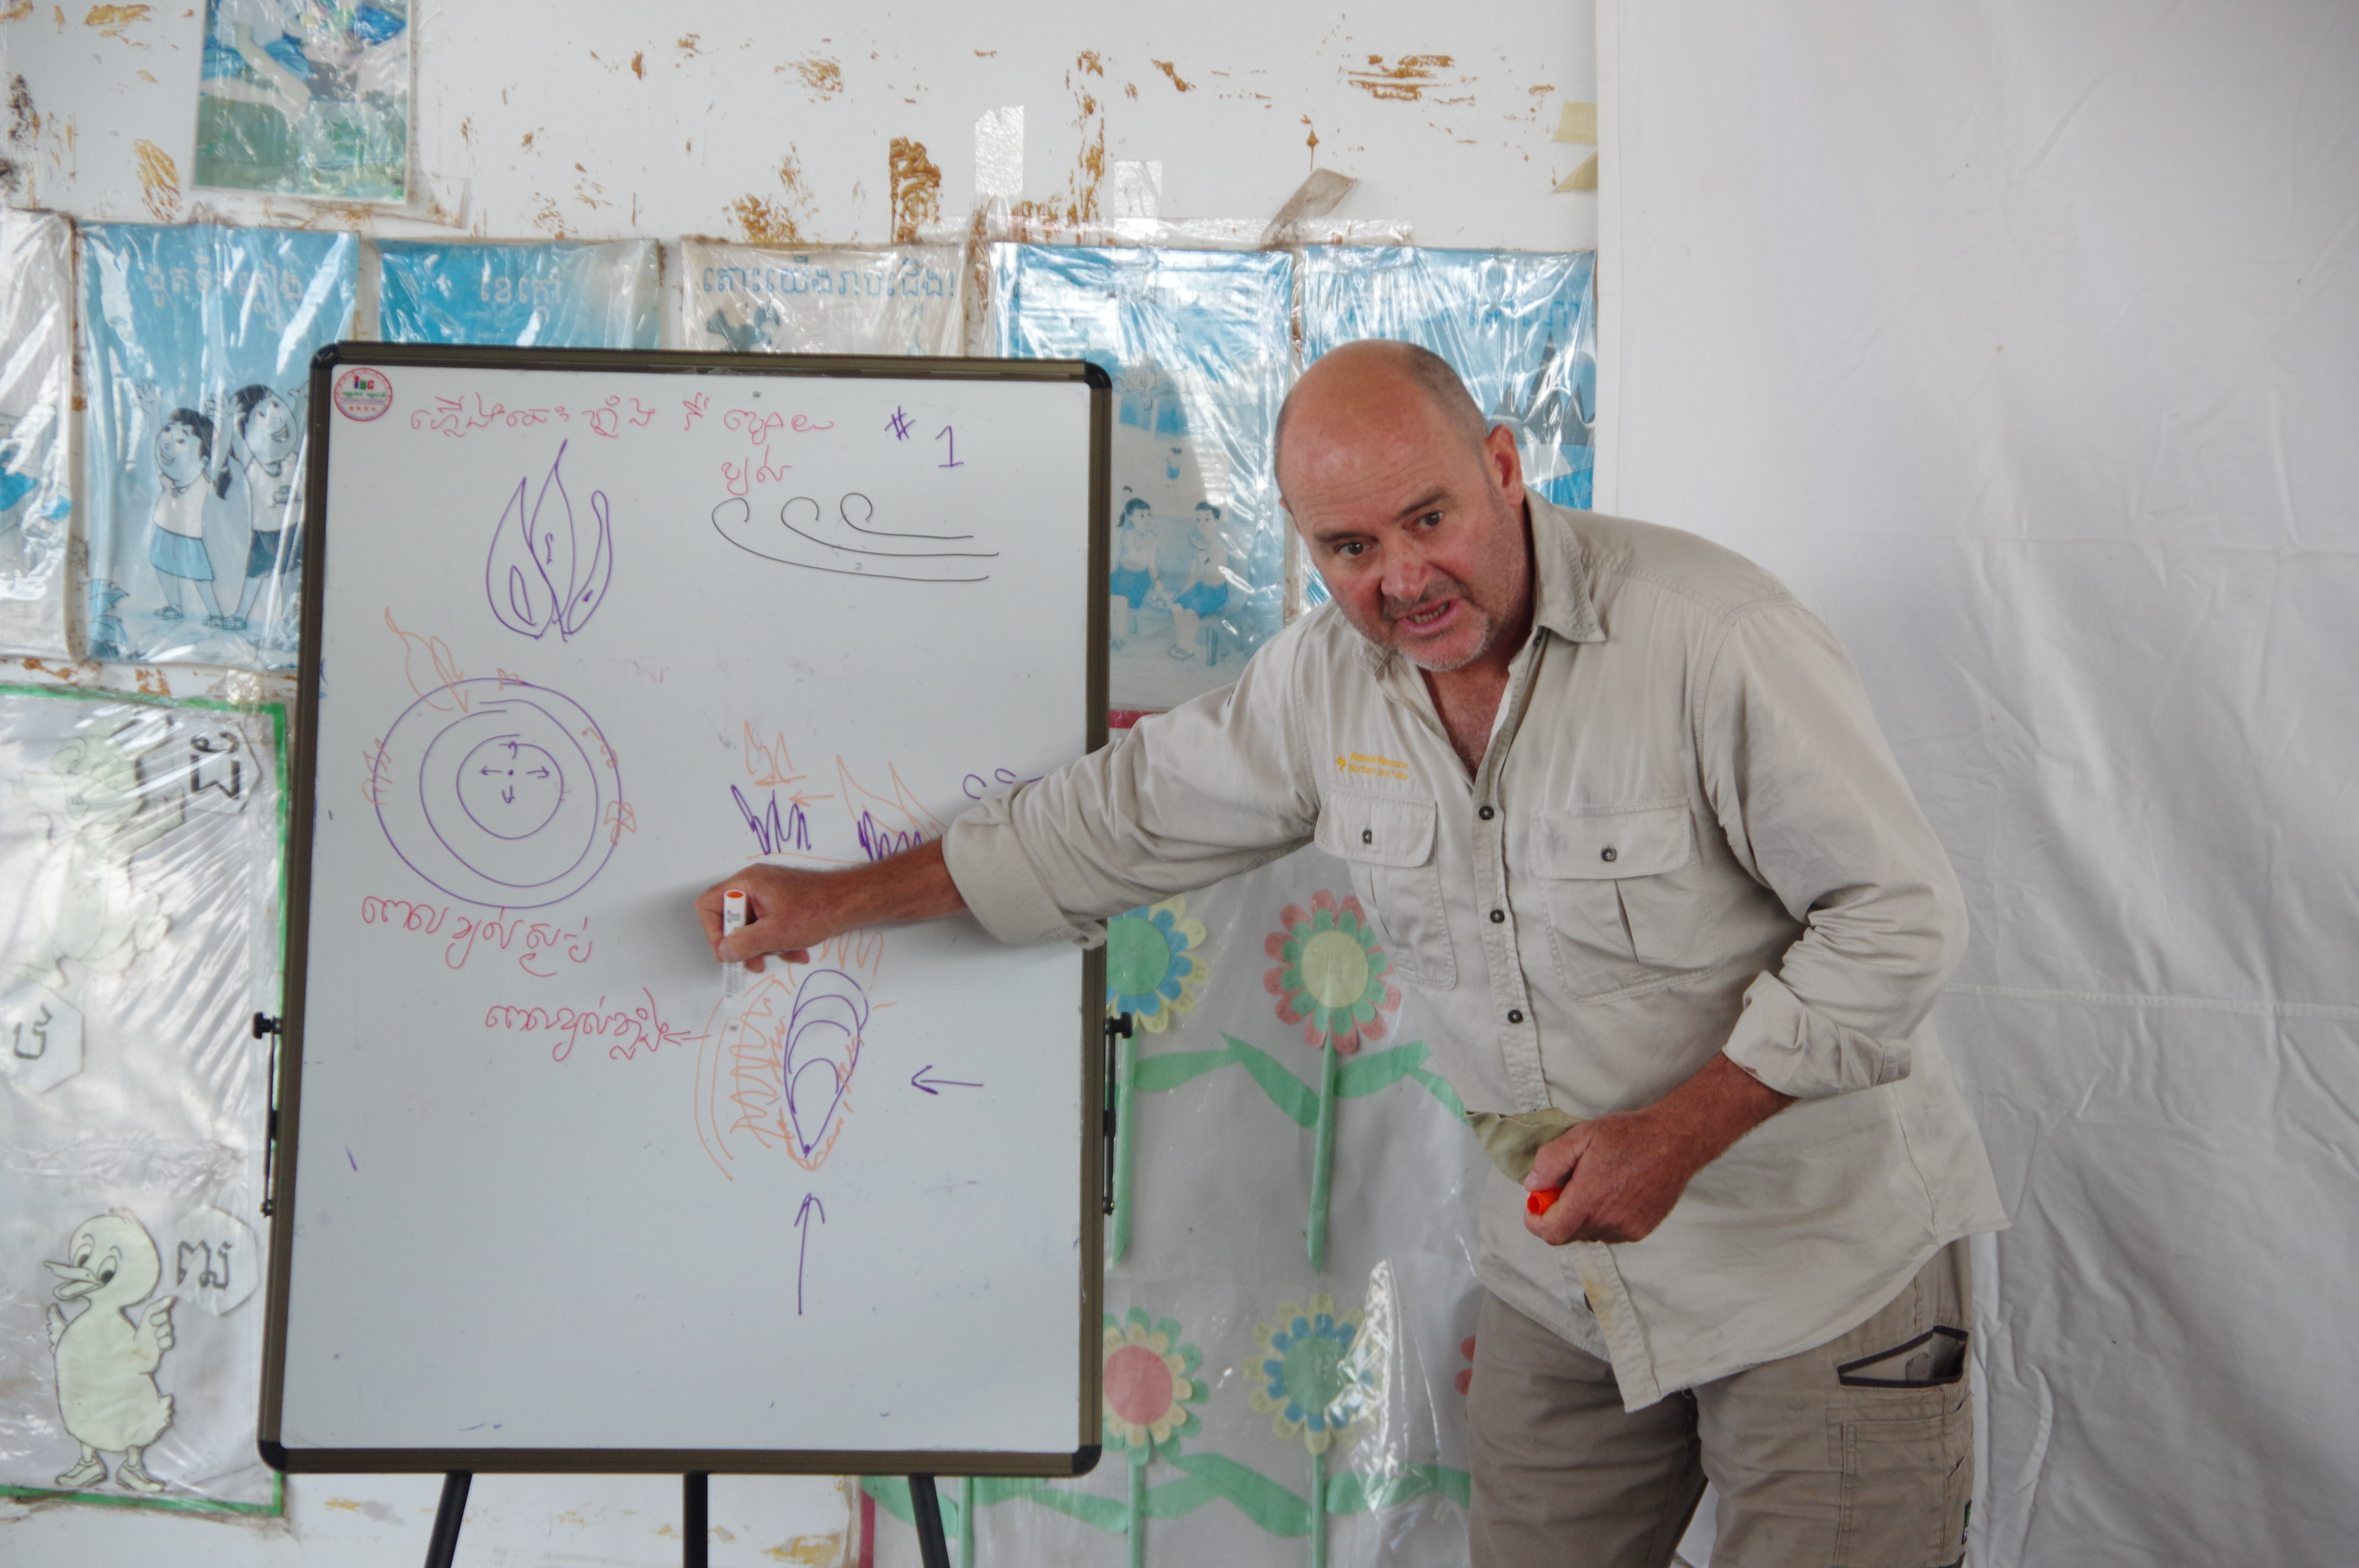 Joe Tilley showing wildfire behaviour on a whiteboard 